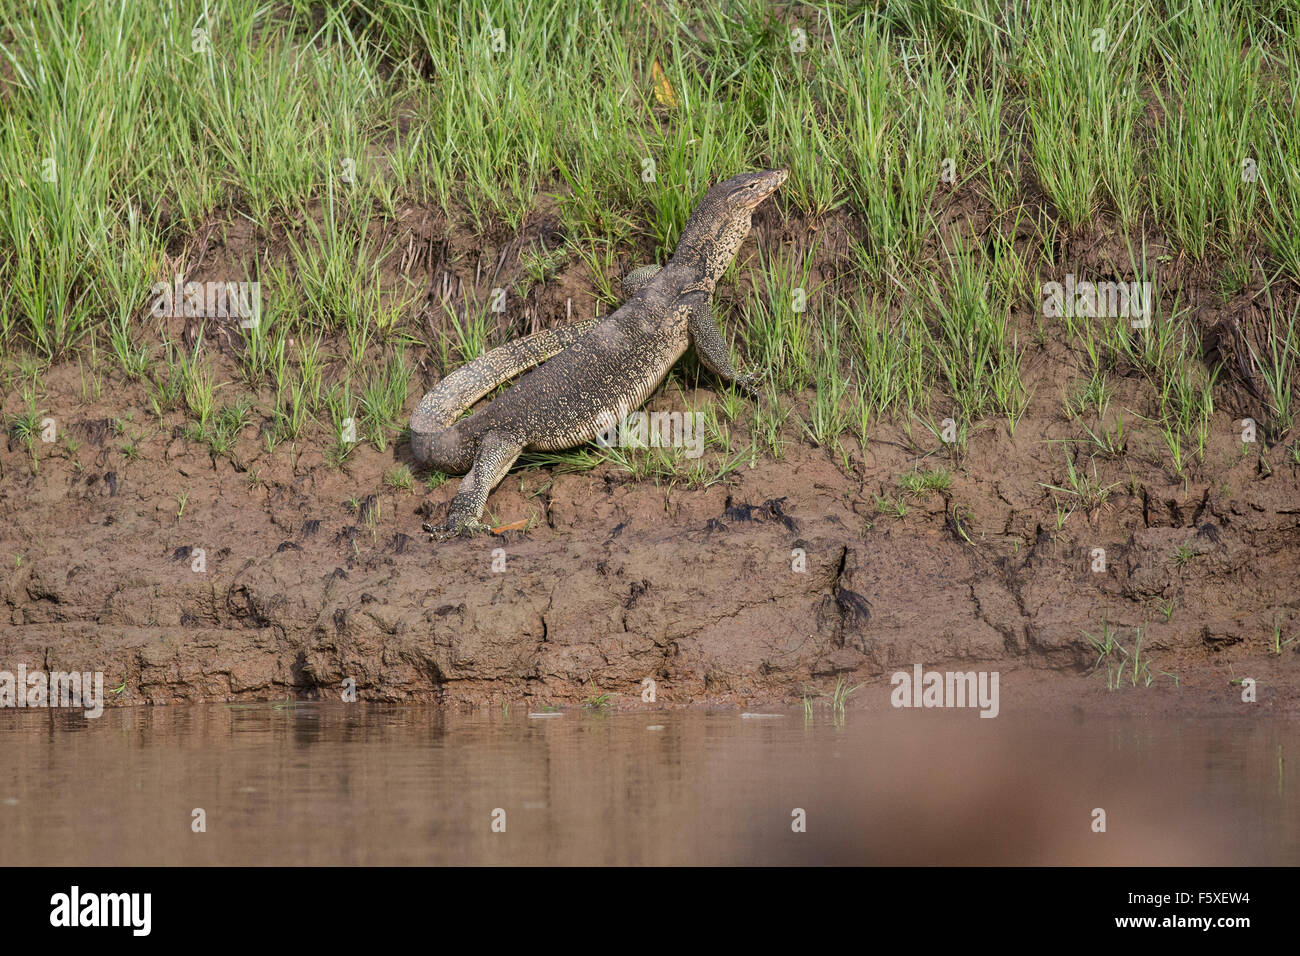 Wild water monitor lizard on the banks of the Kinabatangan river in Borneo Stock Photo